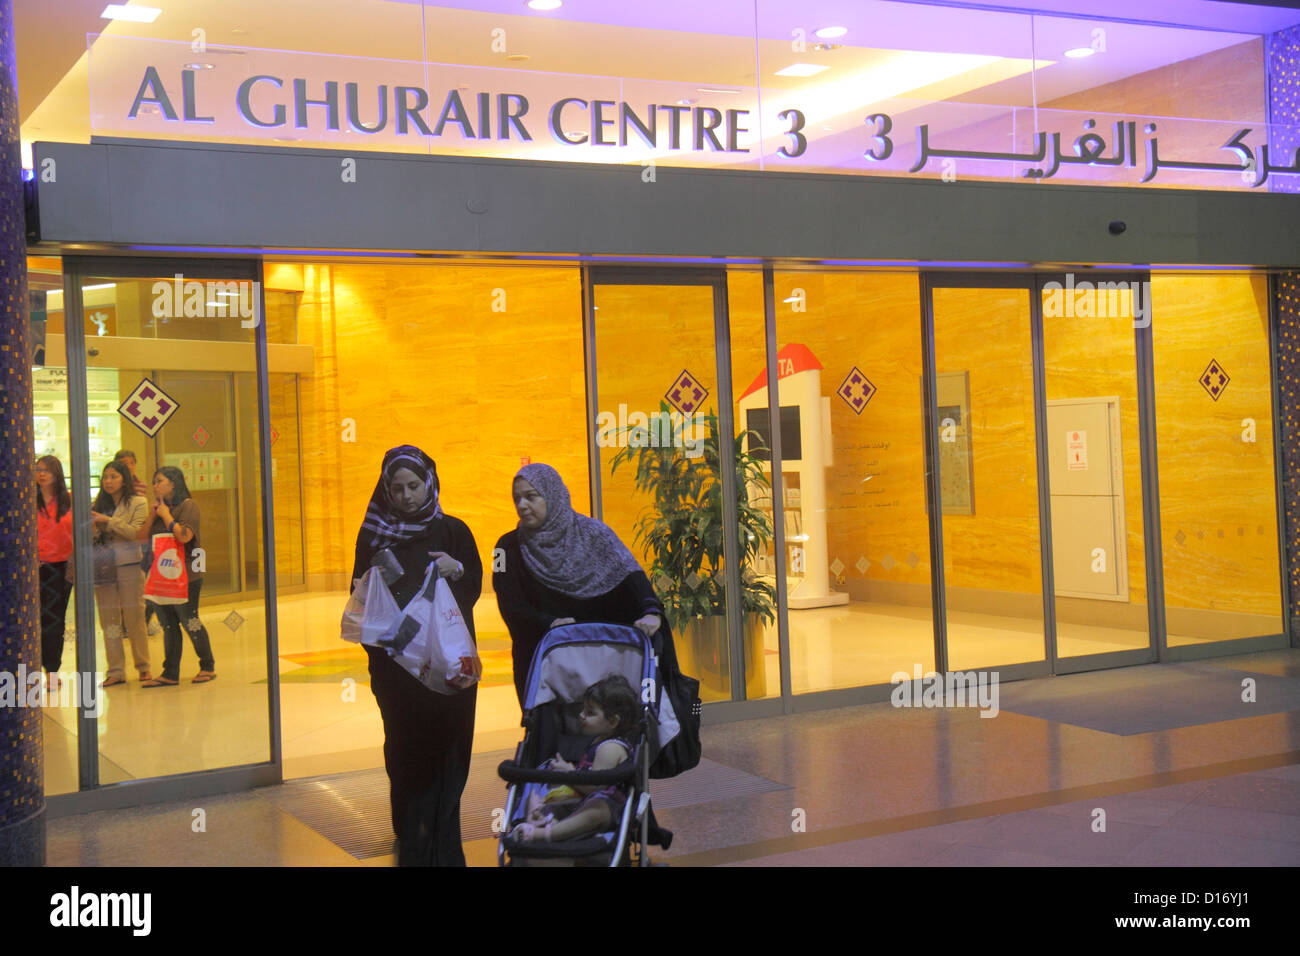 Dubai UAE,United Arab Emirates,Deira,Al Rigga,Al Ghurair Centre,shopping shopper shoppers shop shops market markets marketplace buying selling,retail Stock Photo